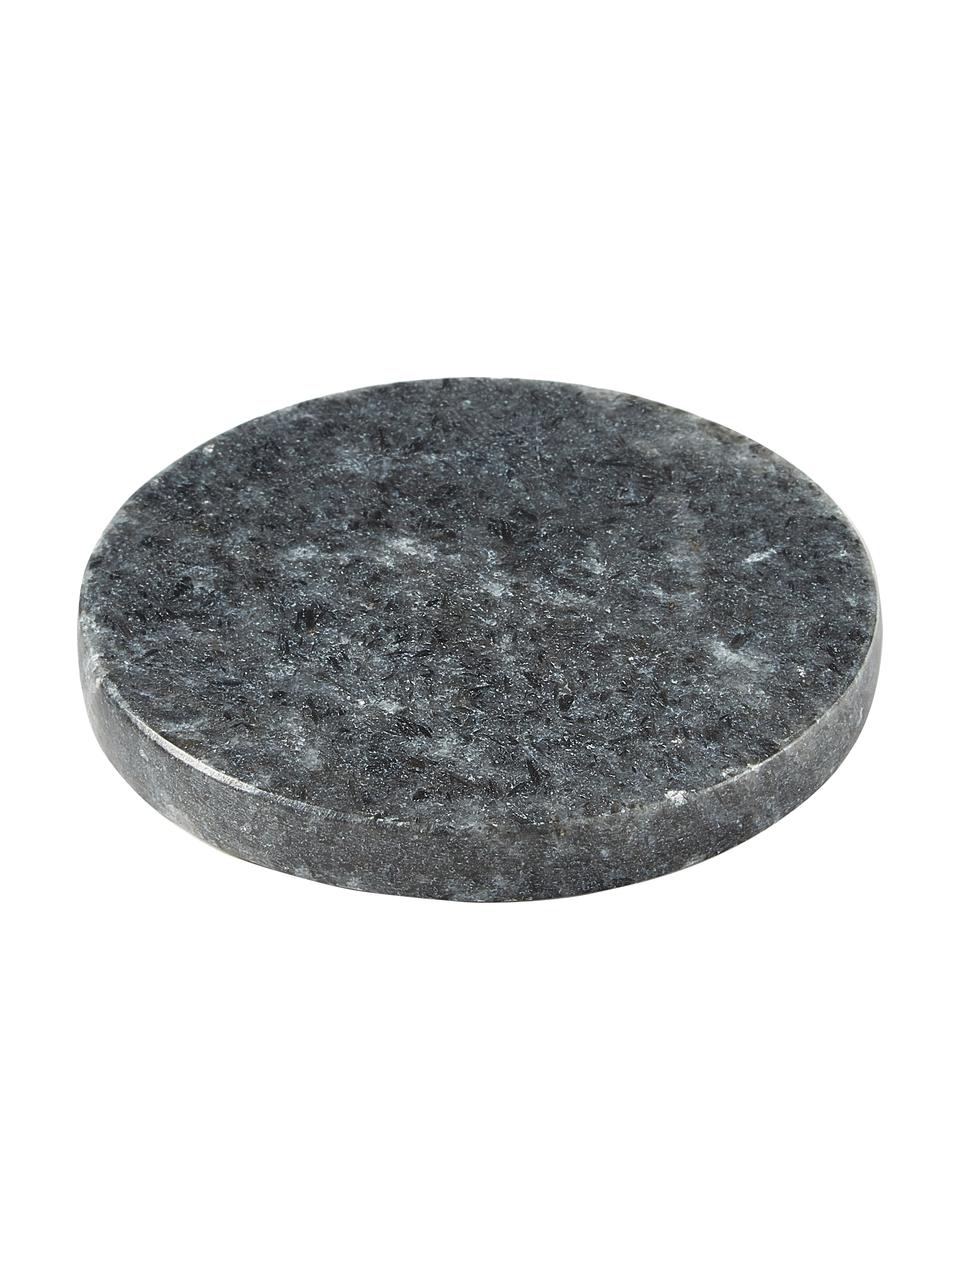 Komplet podkładek z marmuru Callum, 4 elem., Marmur, Wielobarwny, Ø 10 x W 1 cm